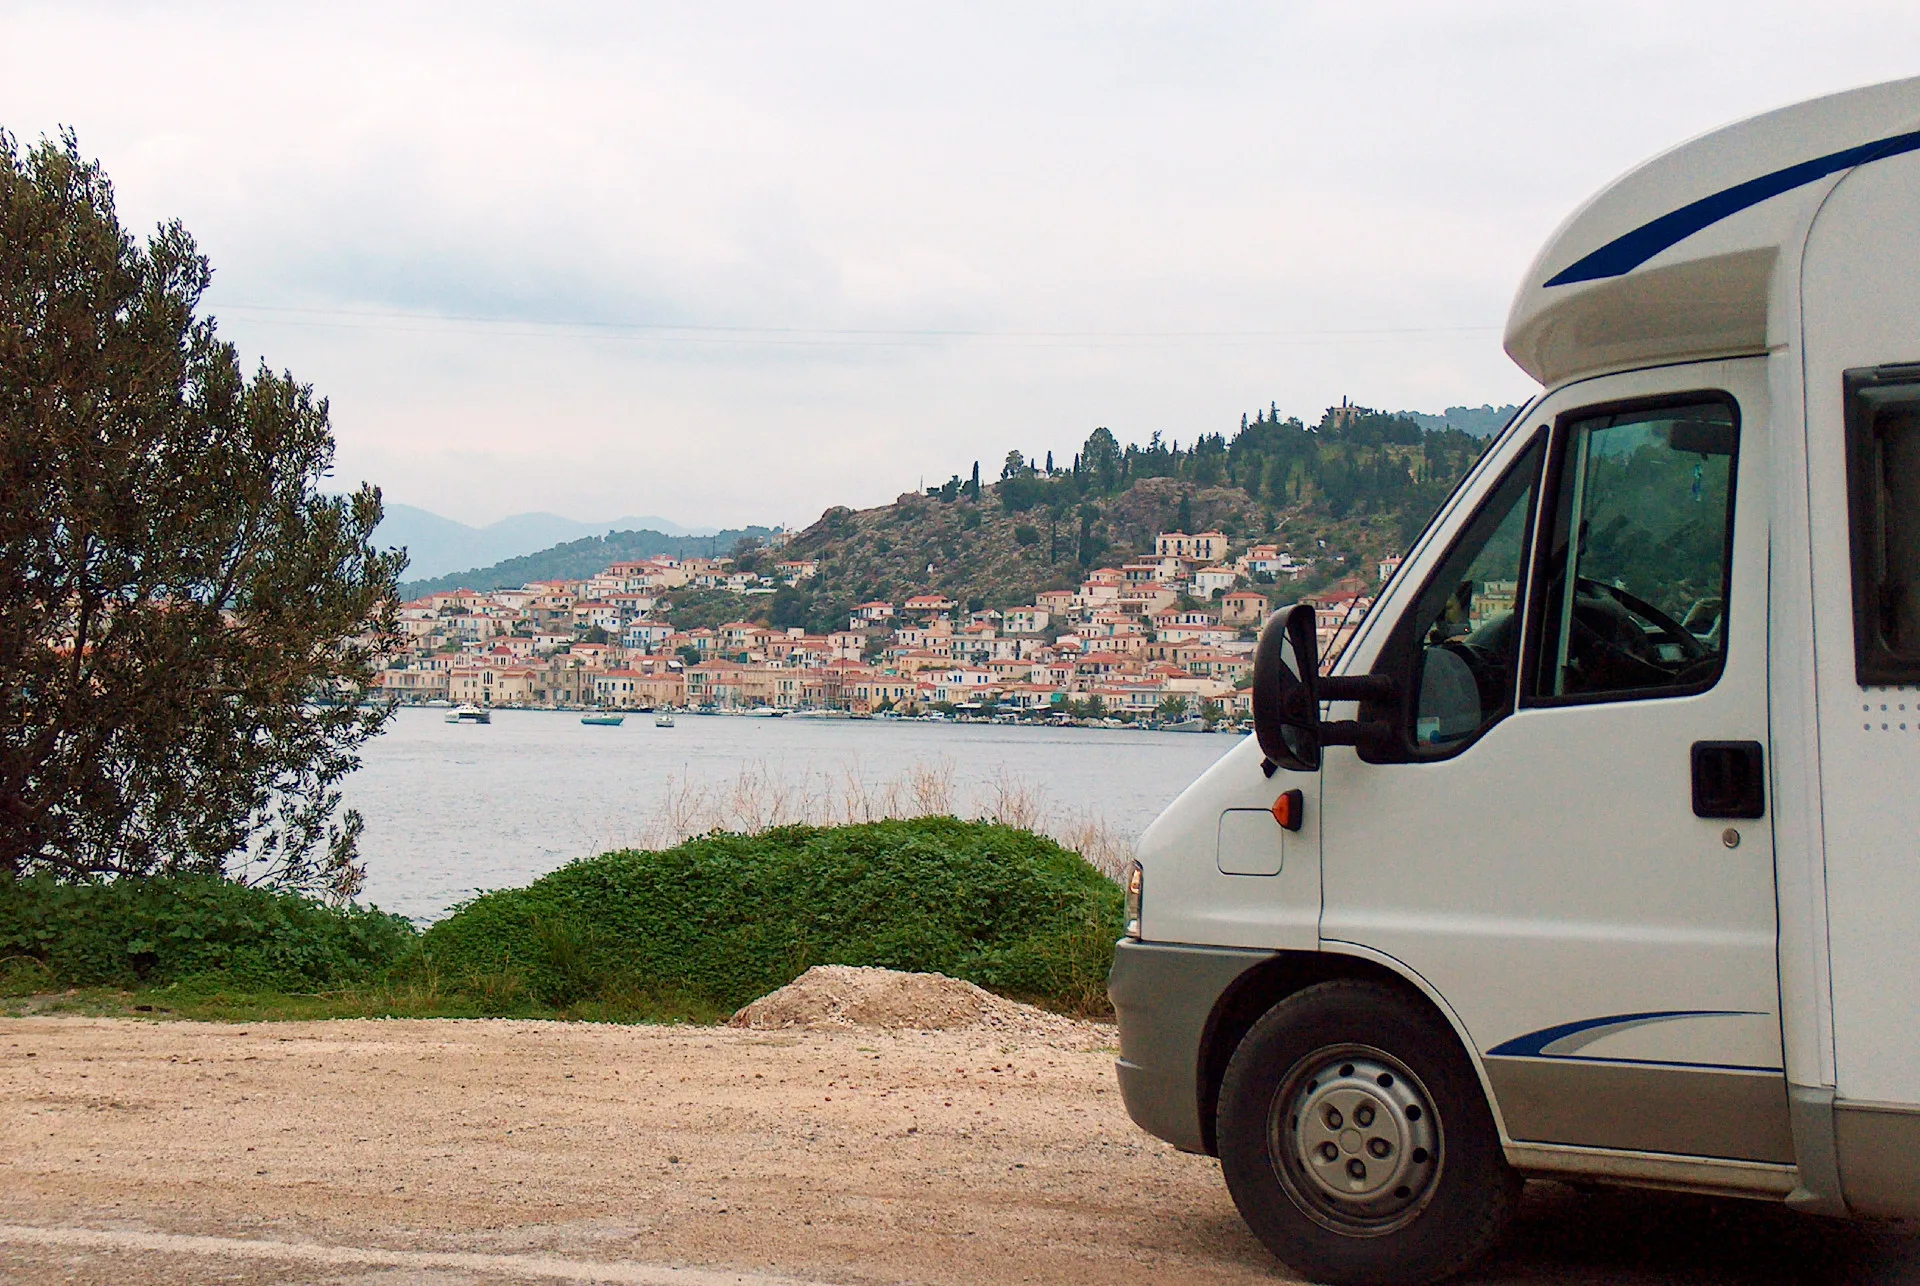 Road trip στην Πελοπόννησο, από Μονεμβασιά έως τον Πόρο